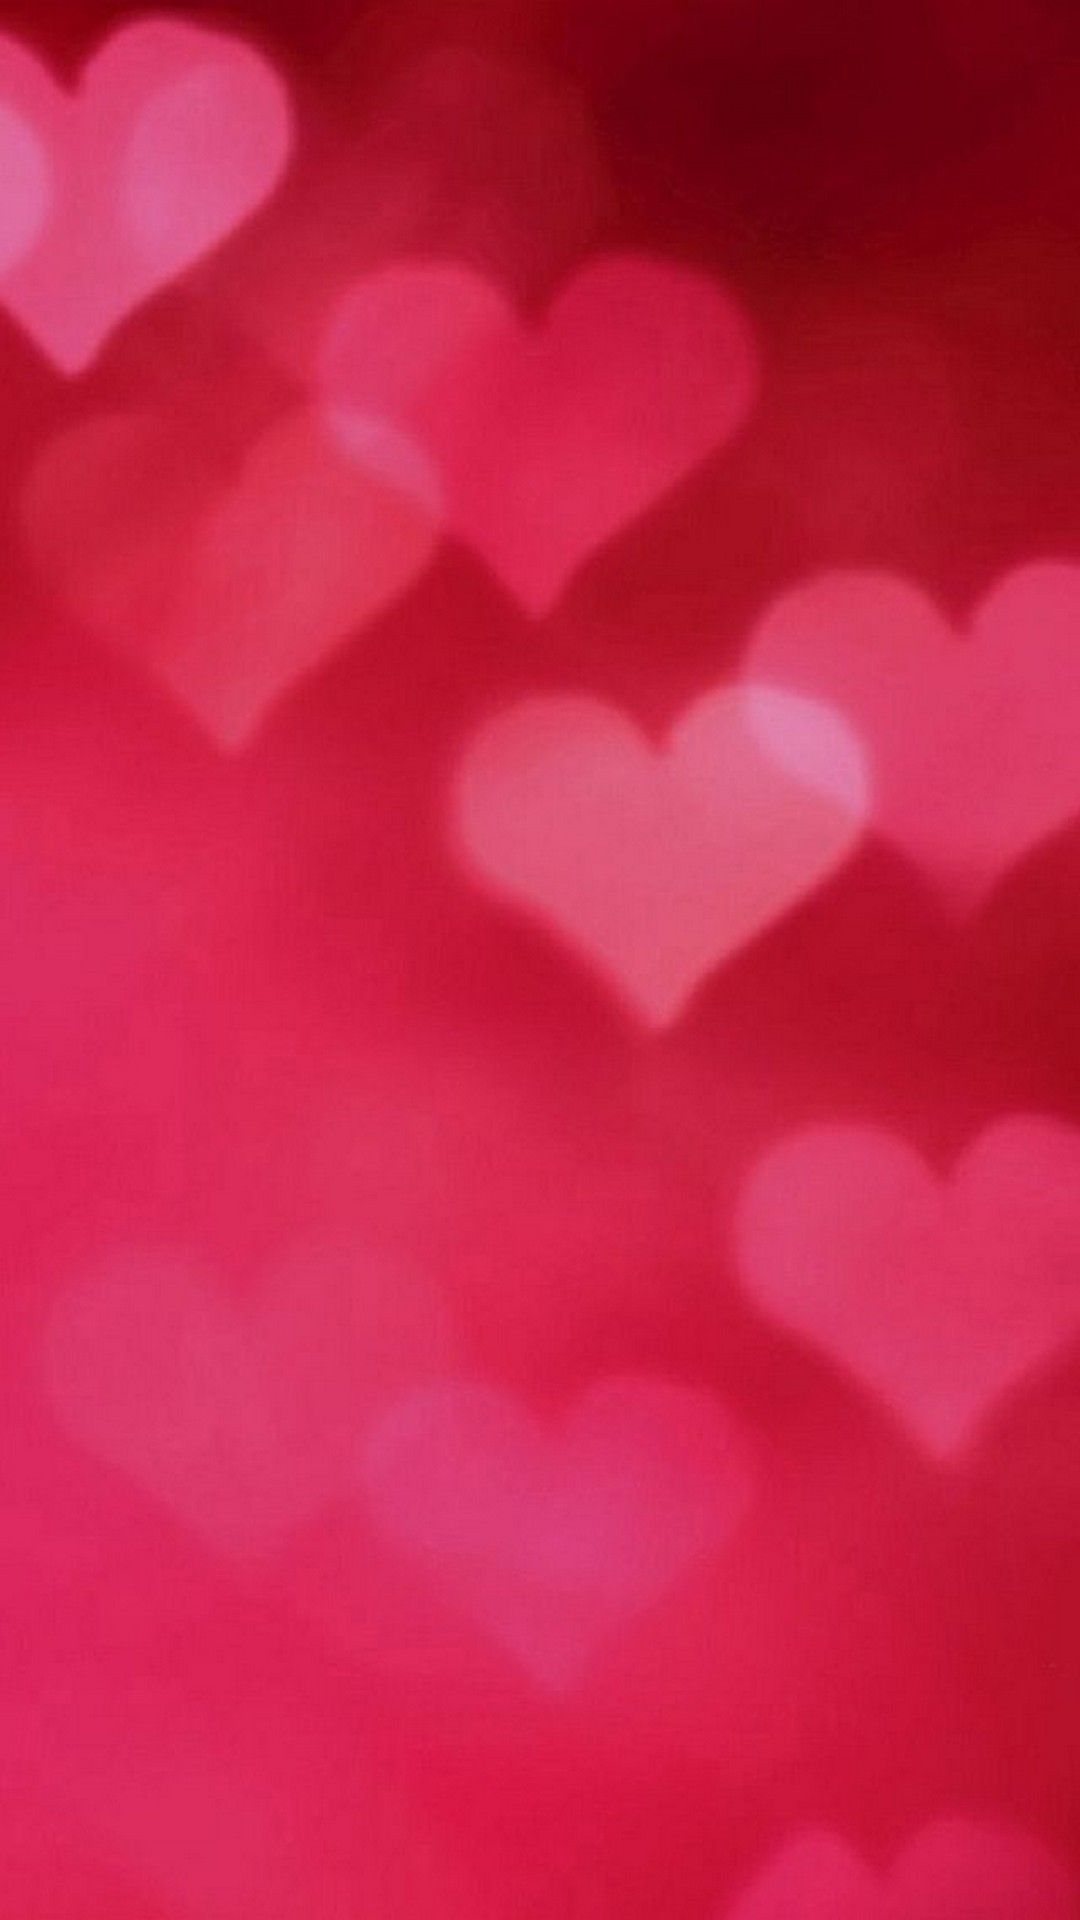 Valentine S Day iPhone Wallpaper Top